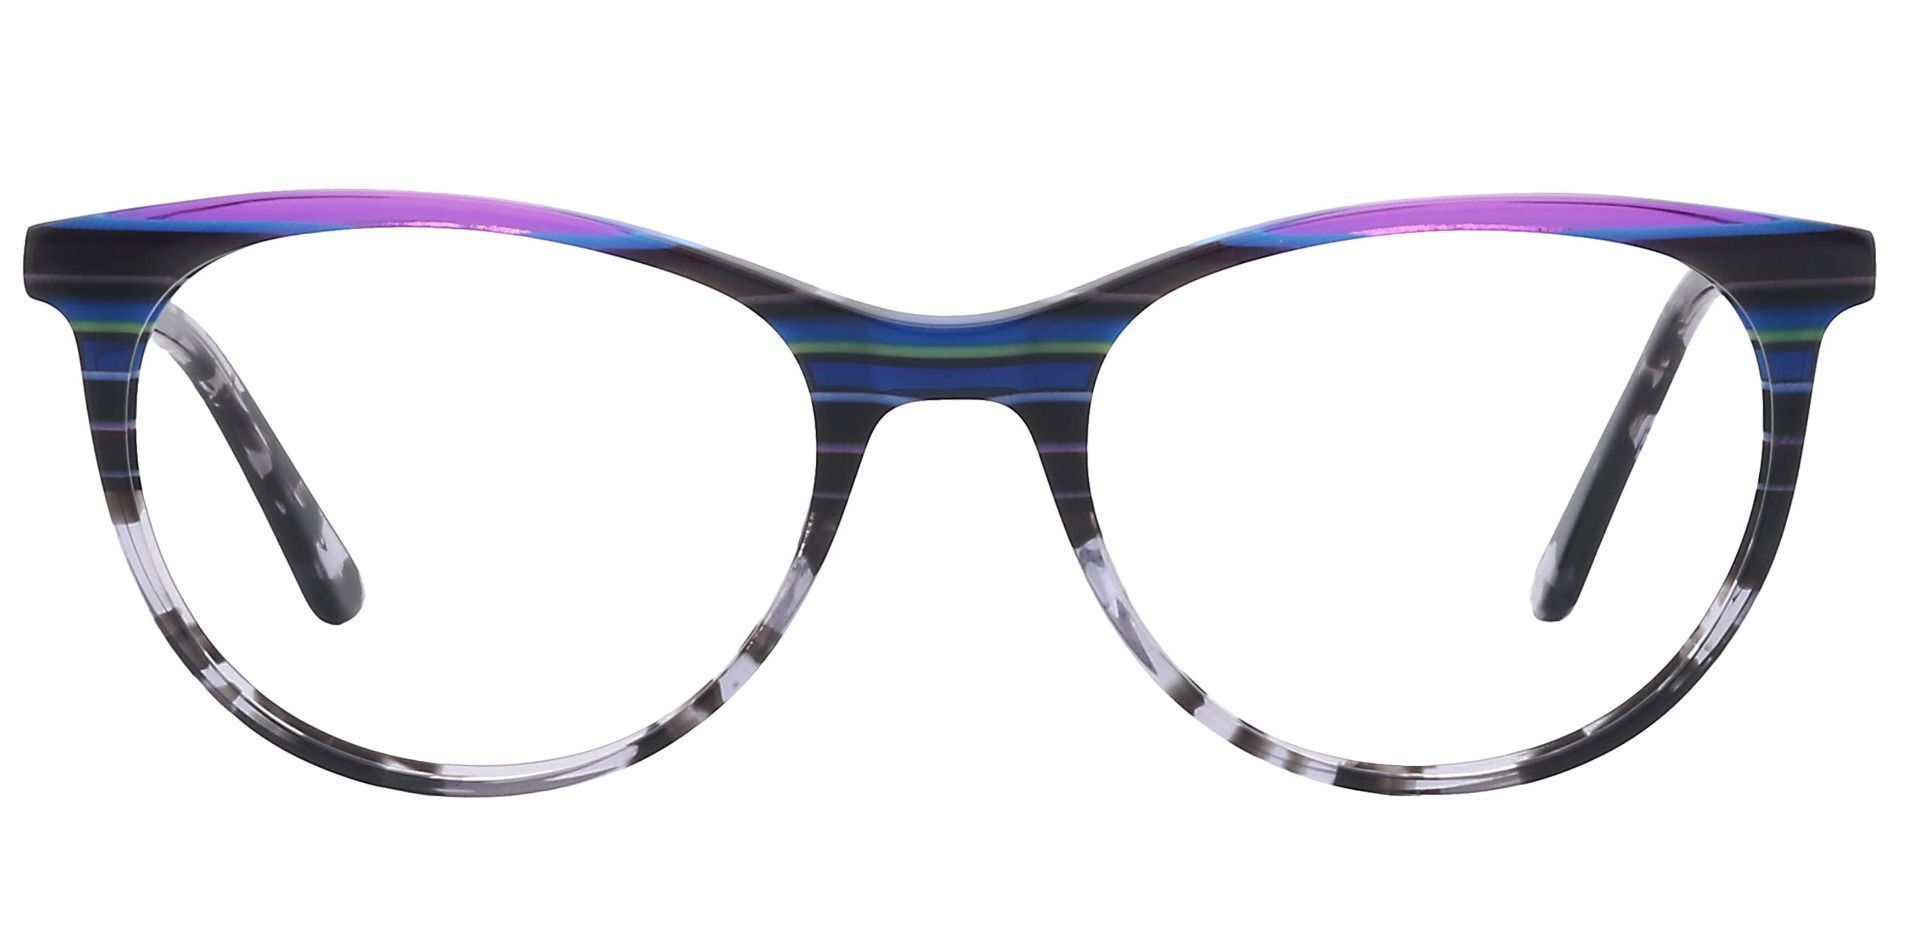 Patagonia Oval Blue Light Blocking Glasses - Multicolored Blue Stripes  Multicolor